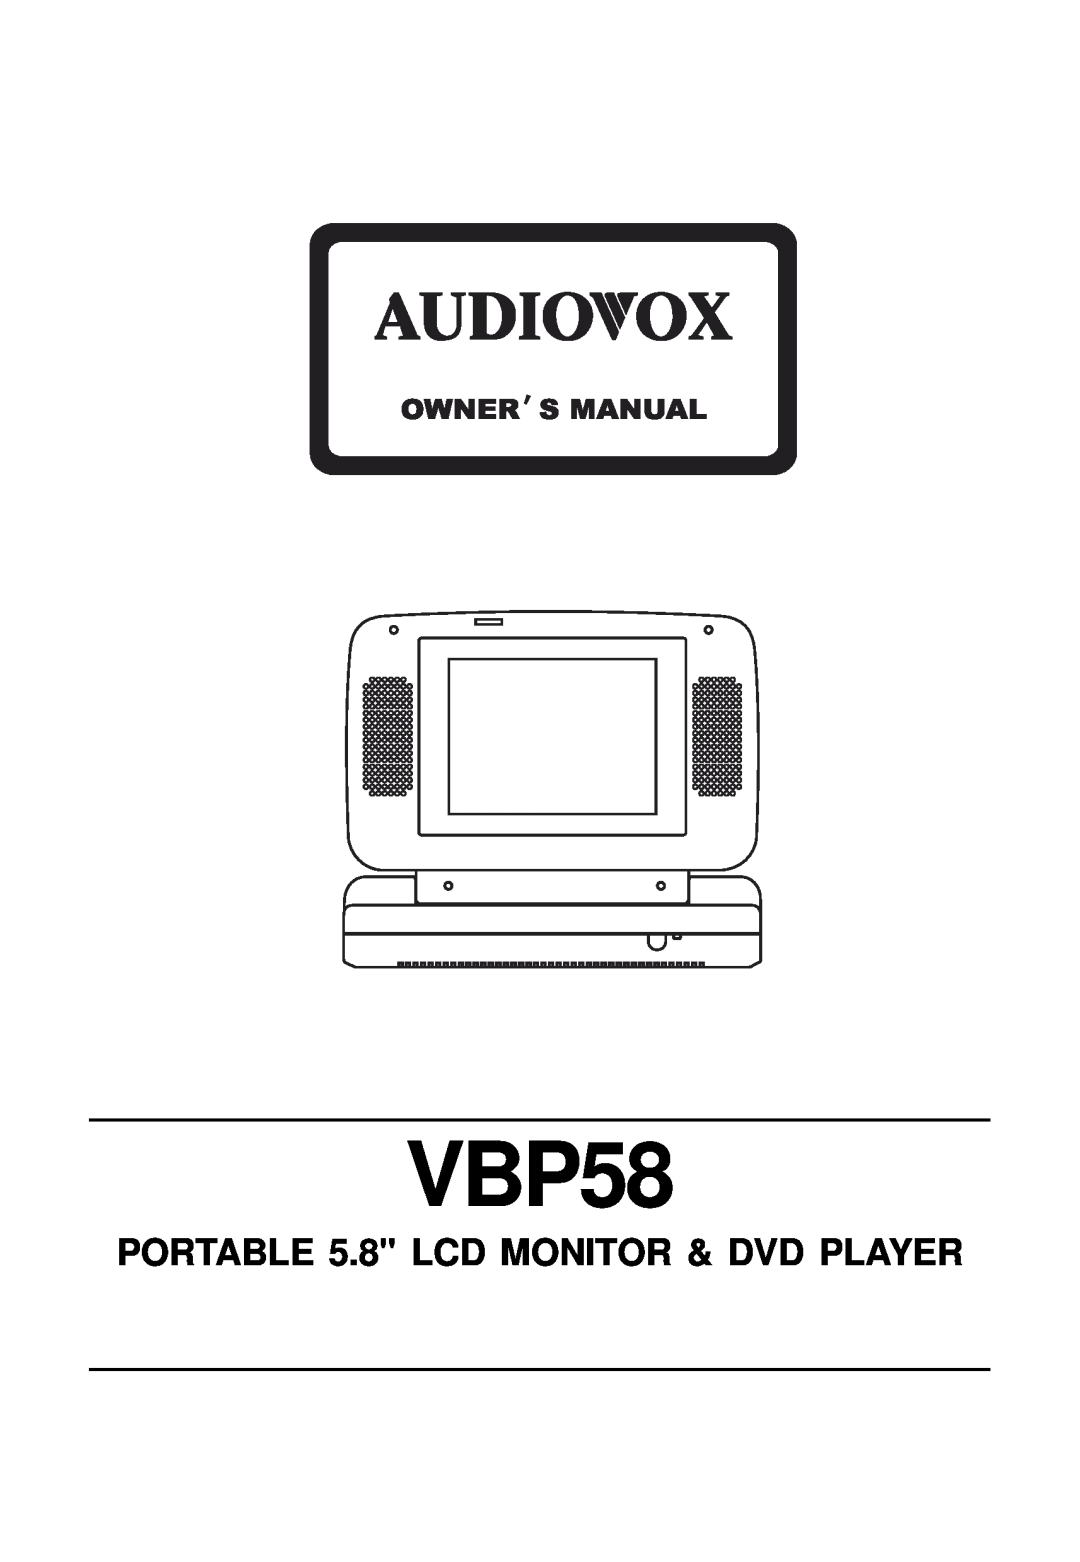 Audiovox VBP58 manual PORTABLE 5.8 LCD MONITOR & DVD PLAYER 